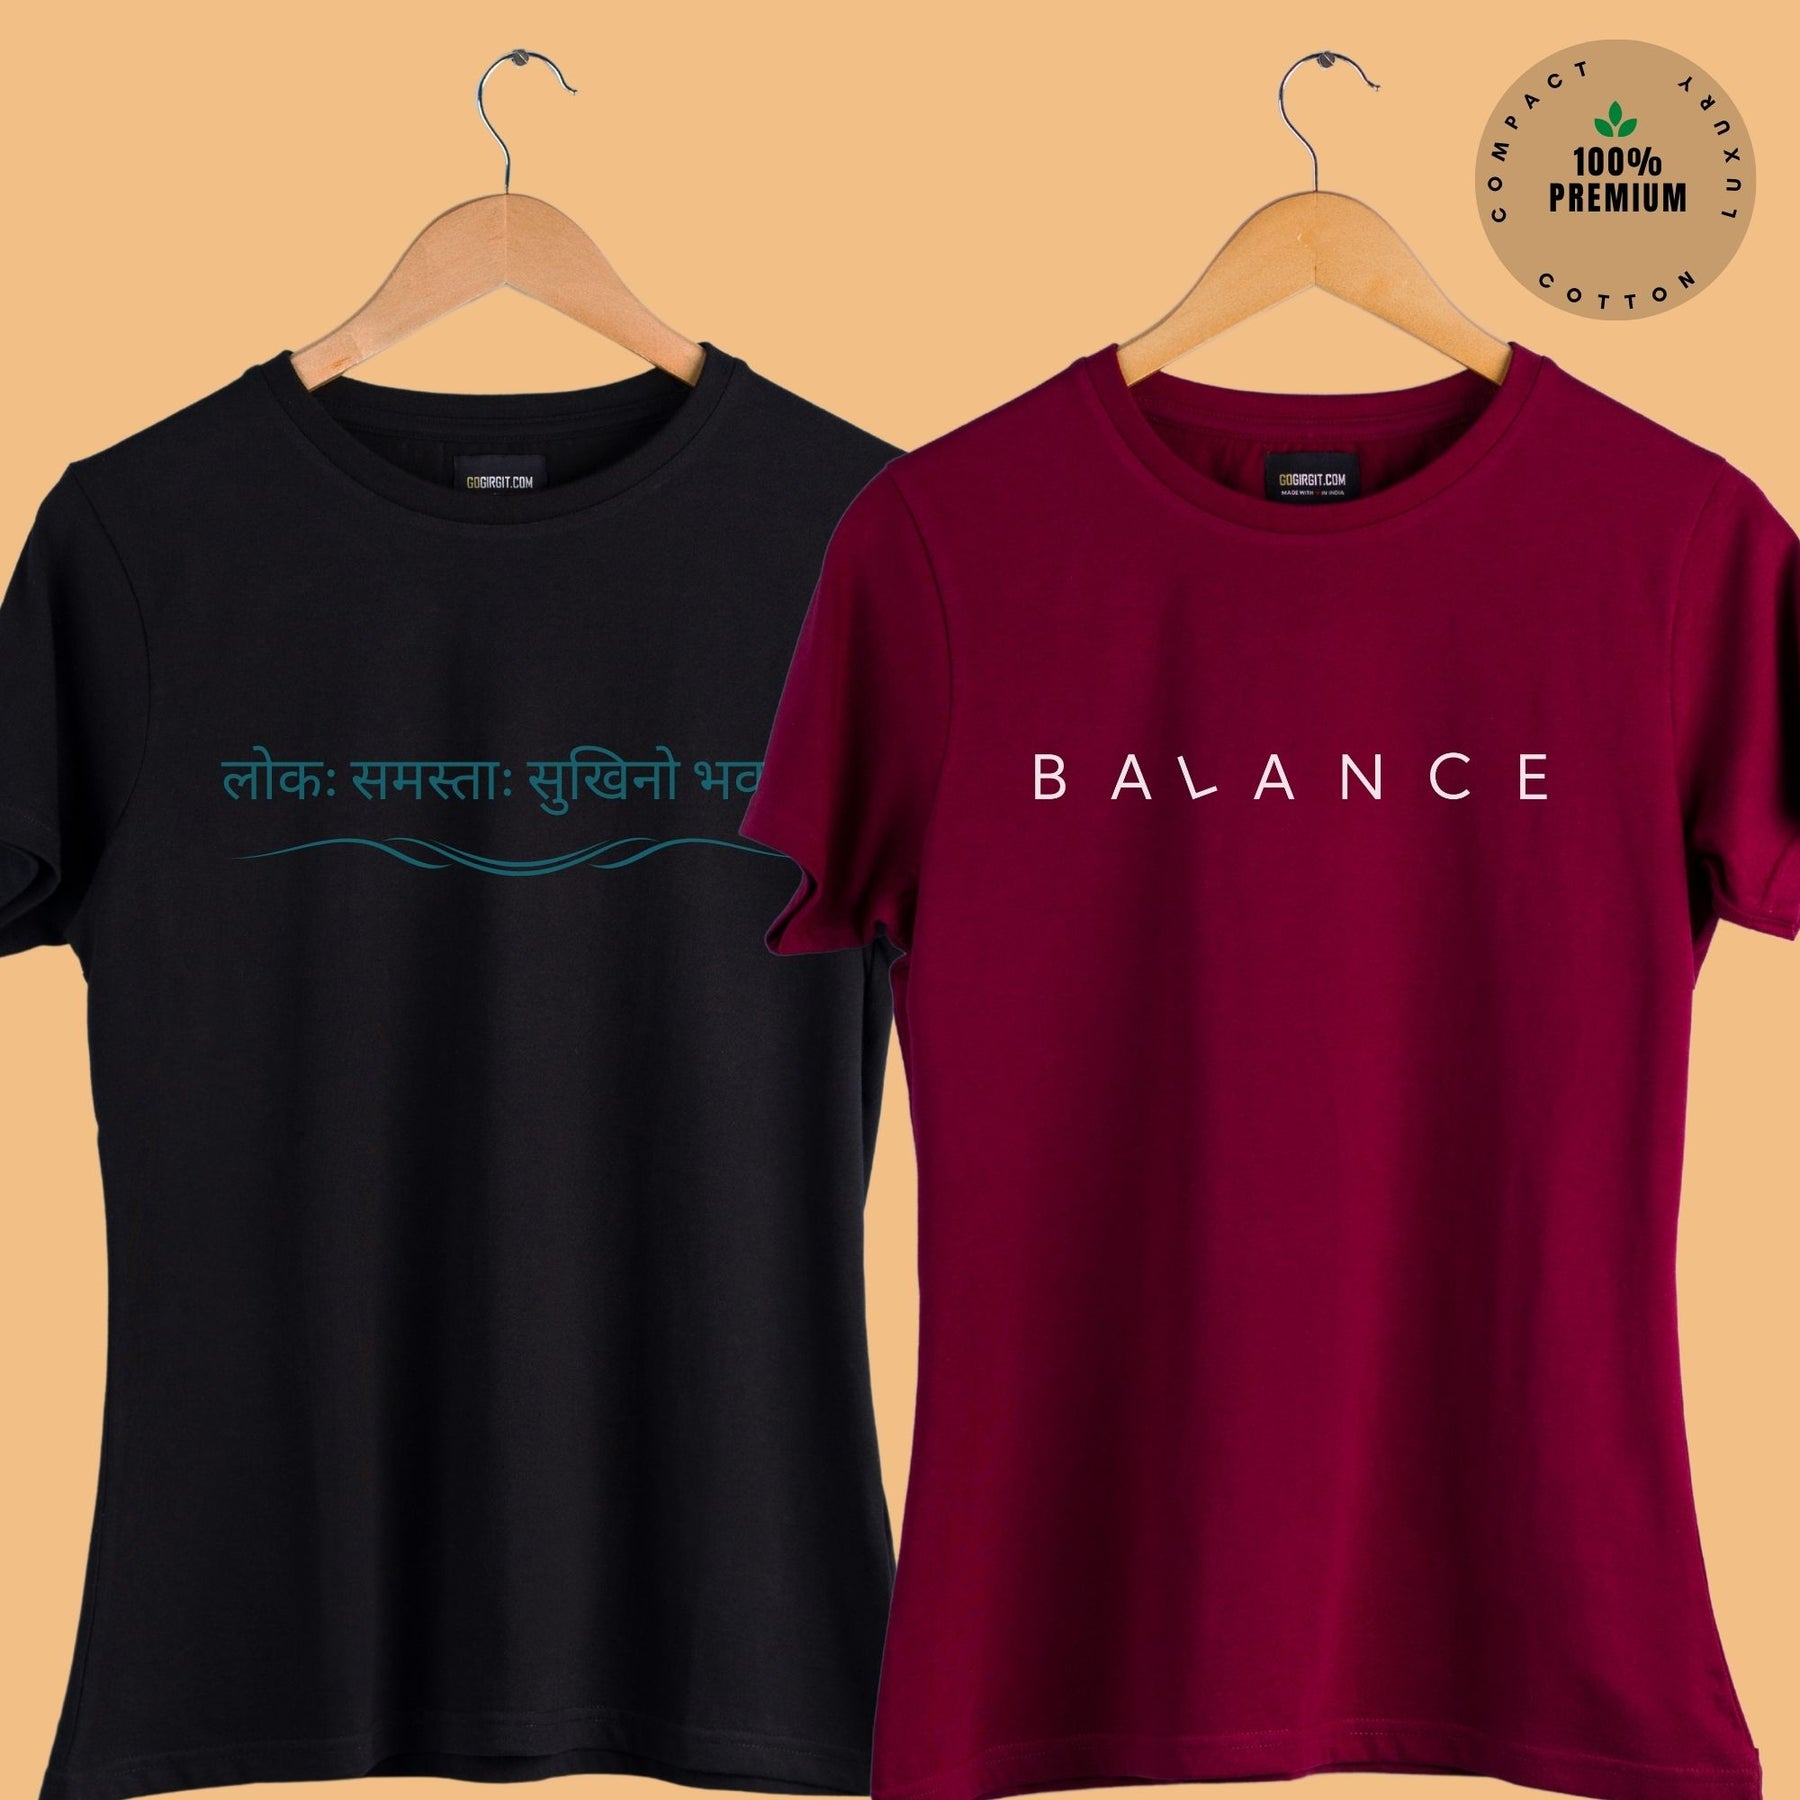 pack-of-2-women-s-printed-t-shirts-in-lok-sukhino-black-balance-maroon-design-tshirt